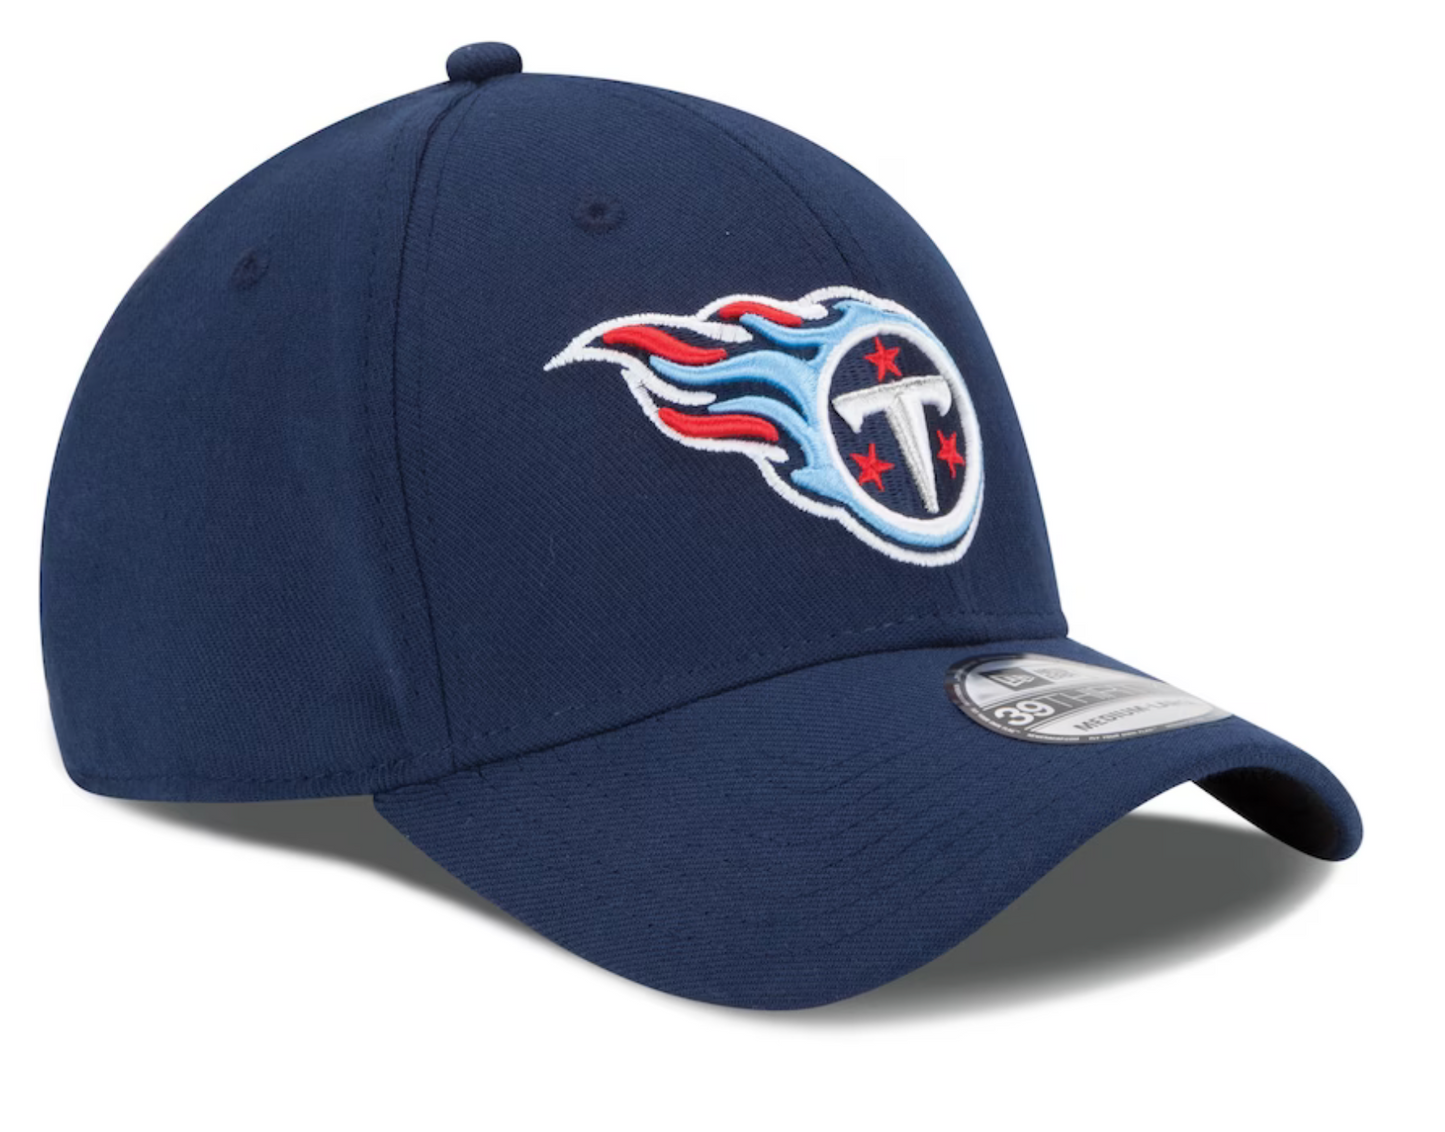 Tennessee Titans New Era 39THIRTY Team Classic Flex Hat - Navy Blue